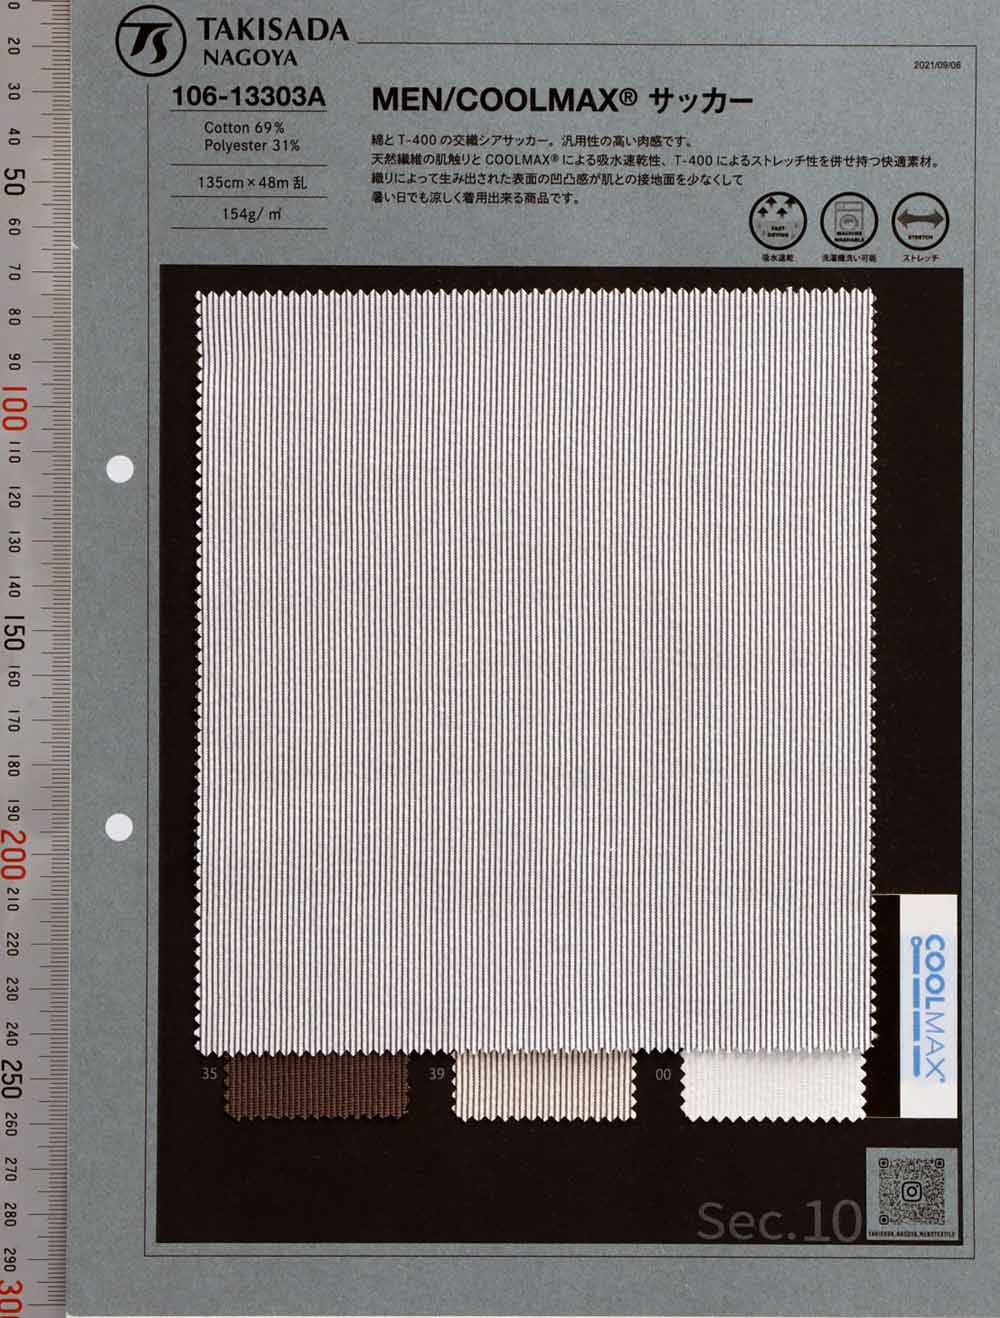 106-13303A HOMMES / COOLMAX® Cordlane Seersucker[Fabrication De Textile] Takisada Nagoya